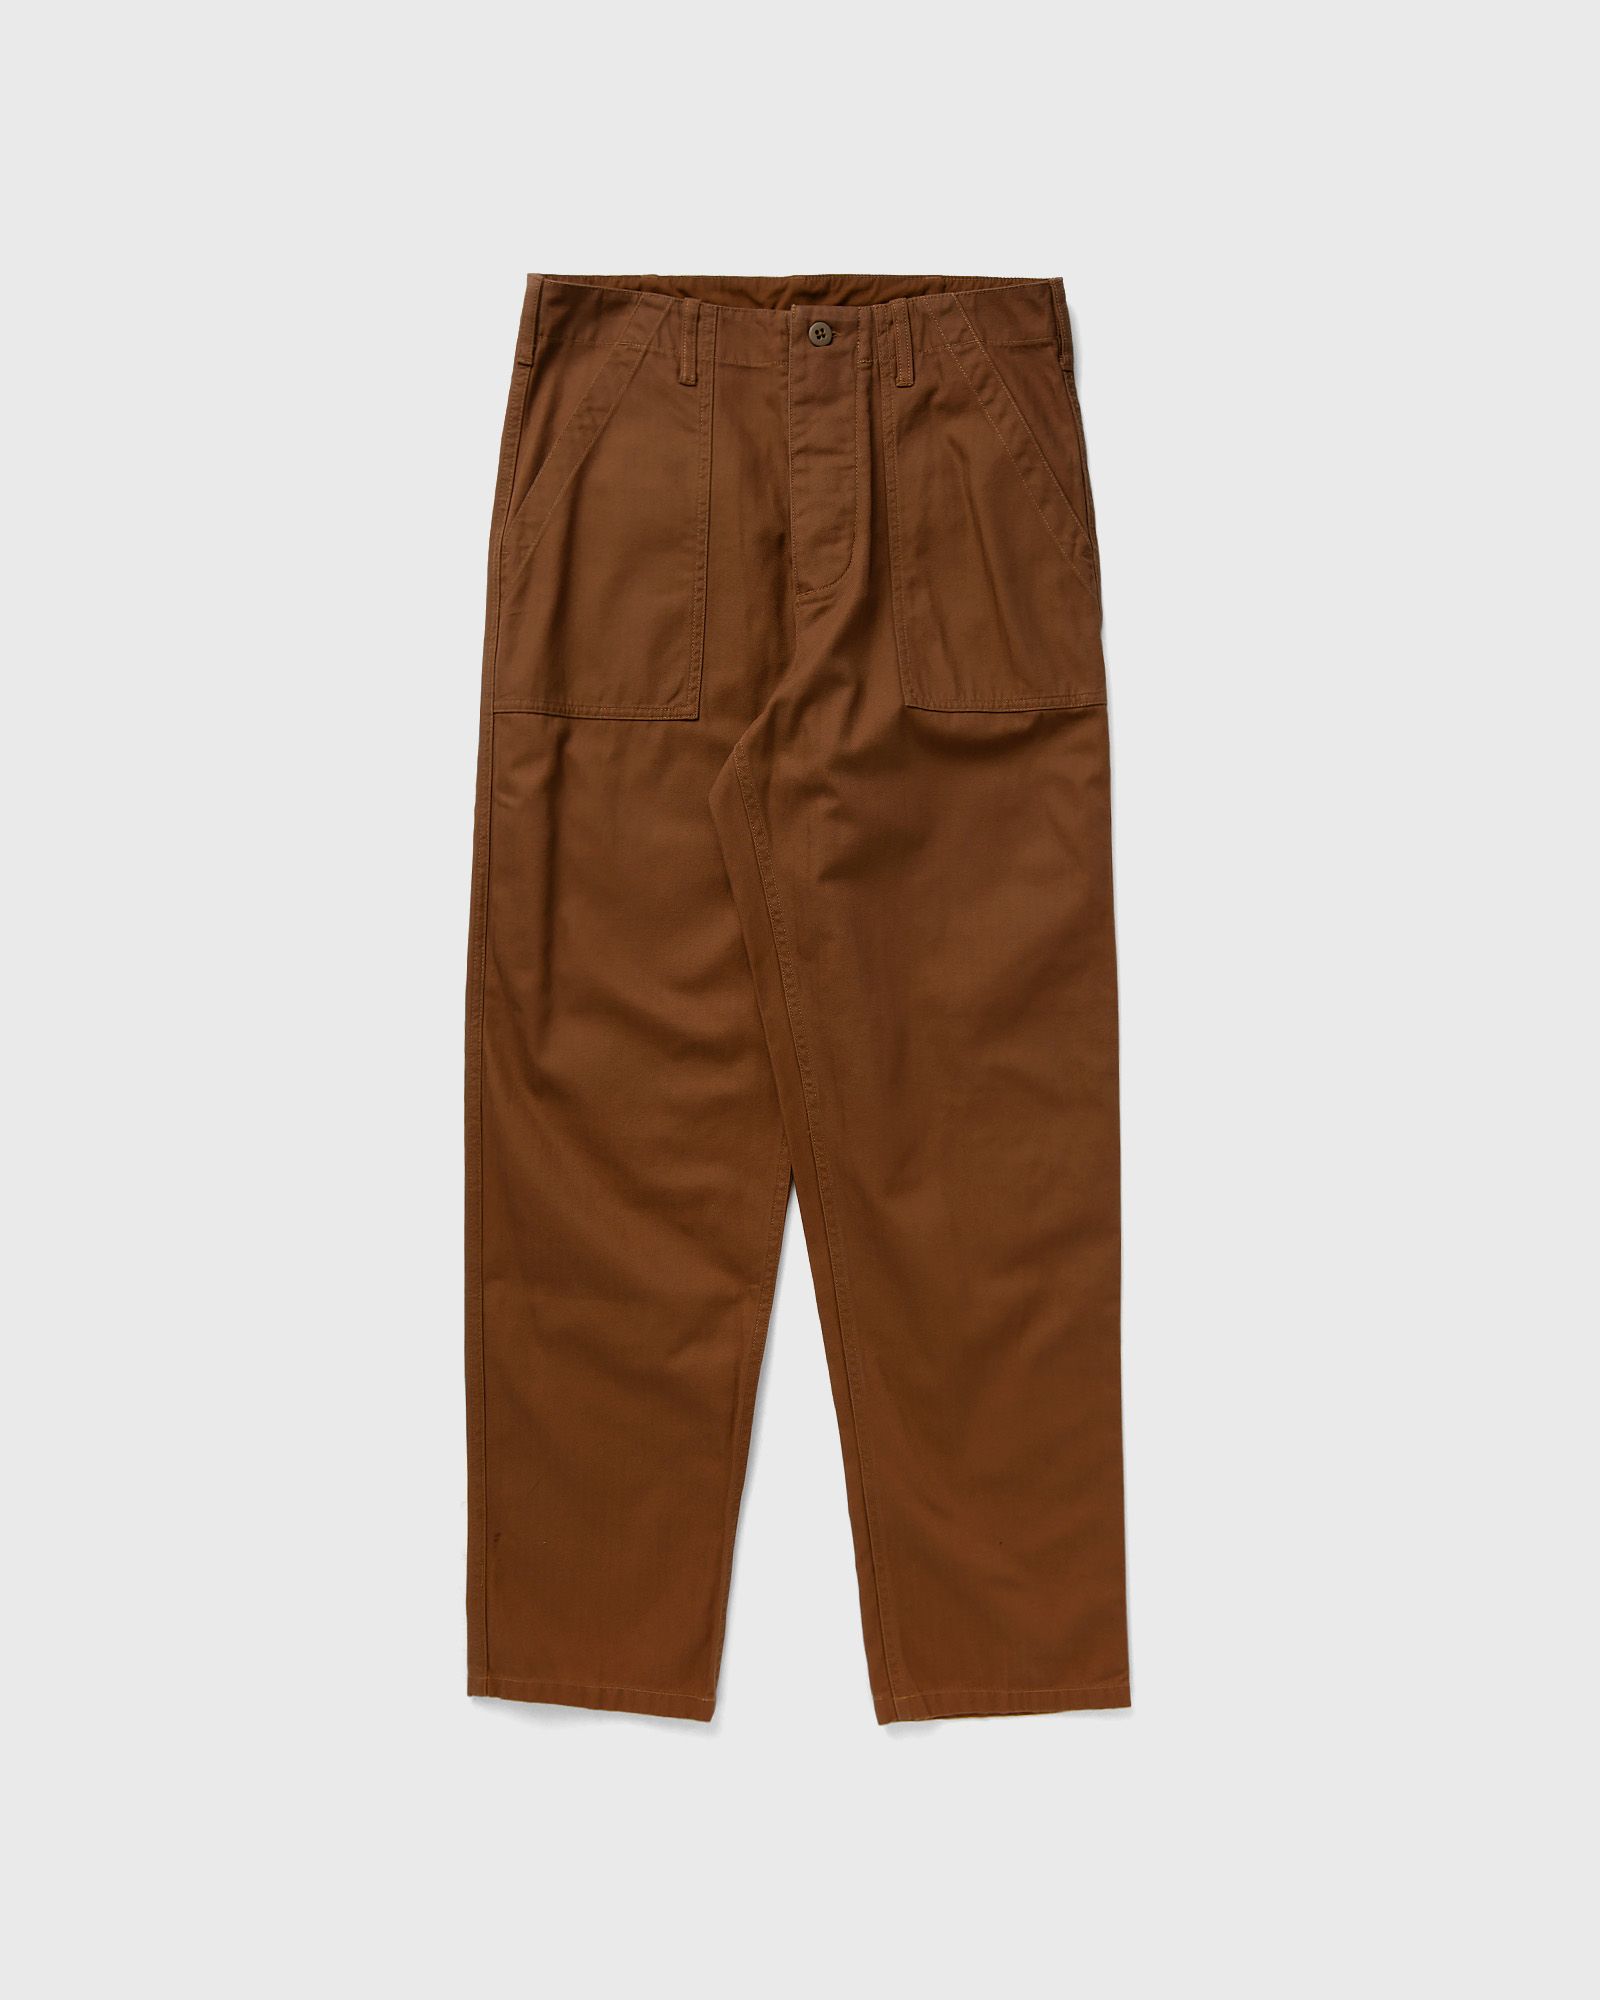 Nike - life fatigue pant men casual pants brown in größe:xxl